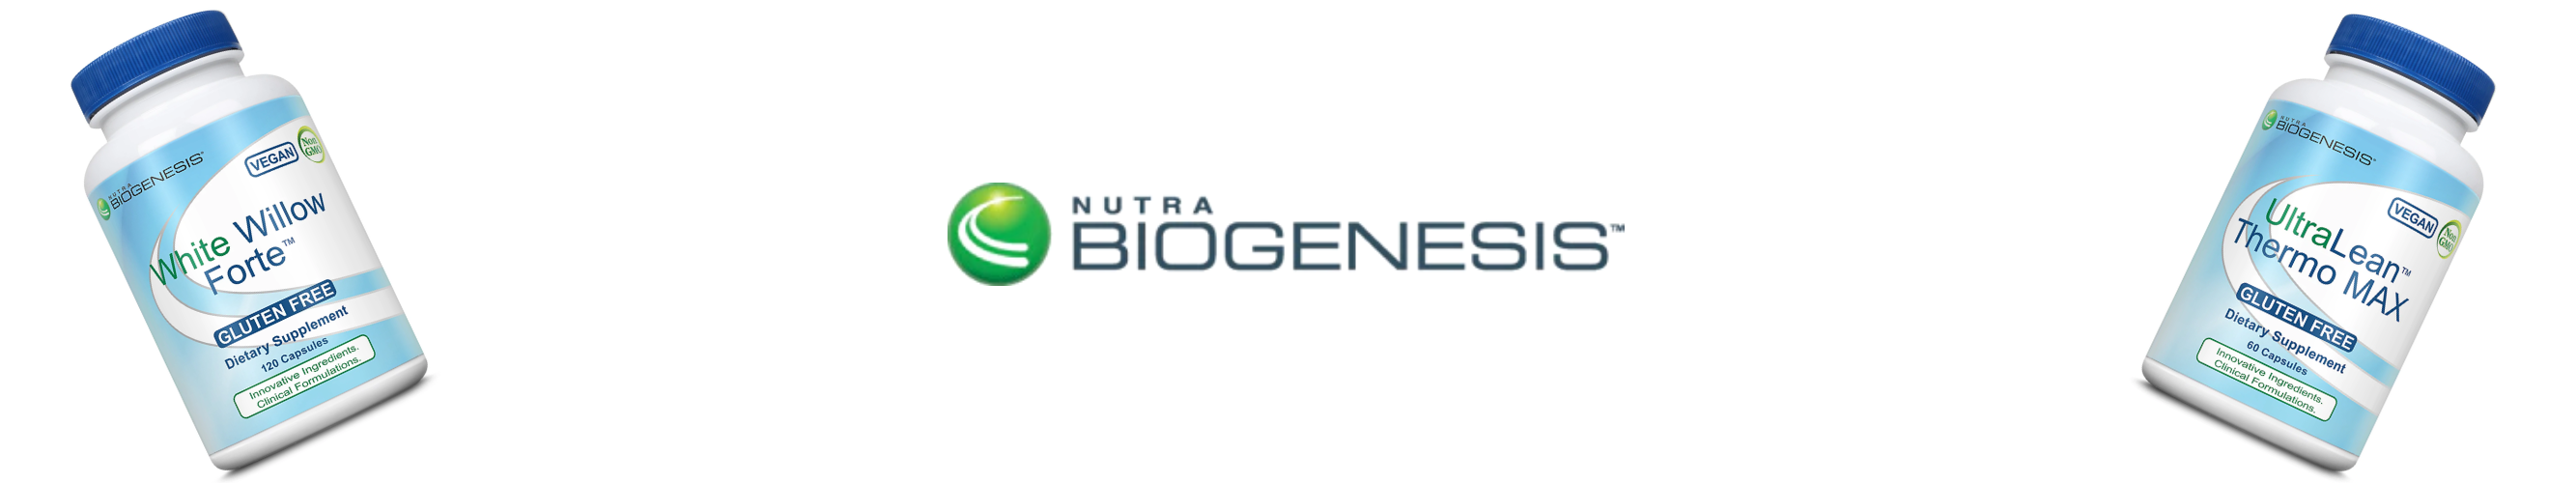 HiLife Vitamins | Nutra Biogenesis